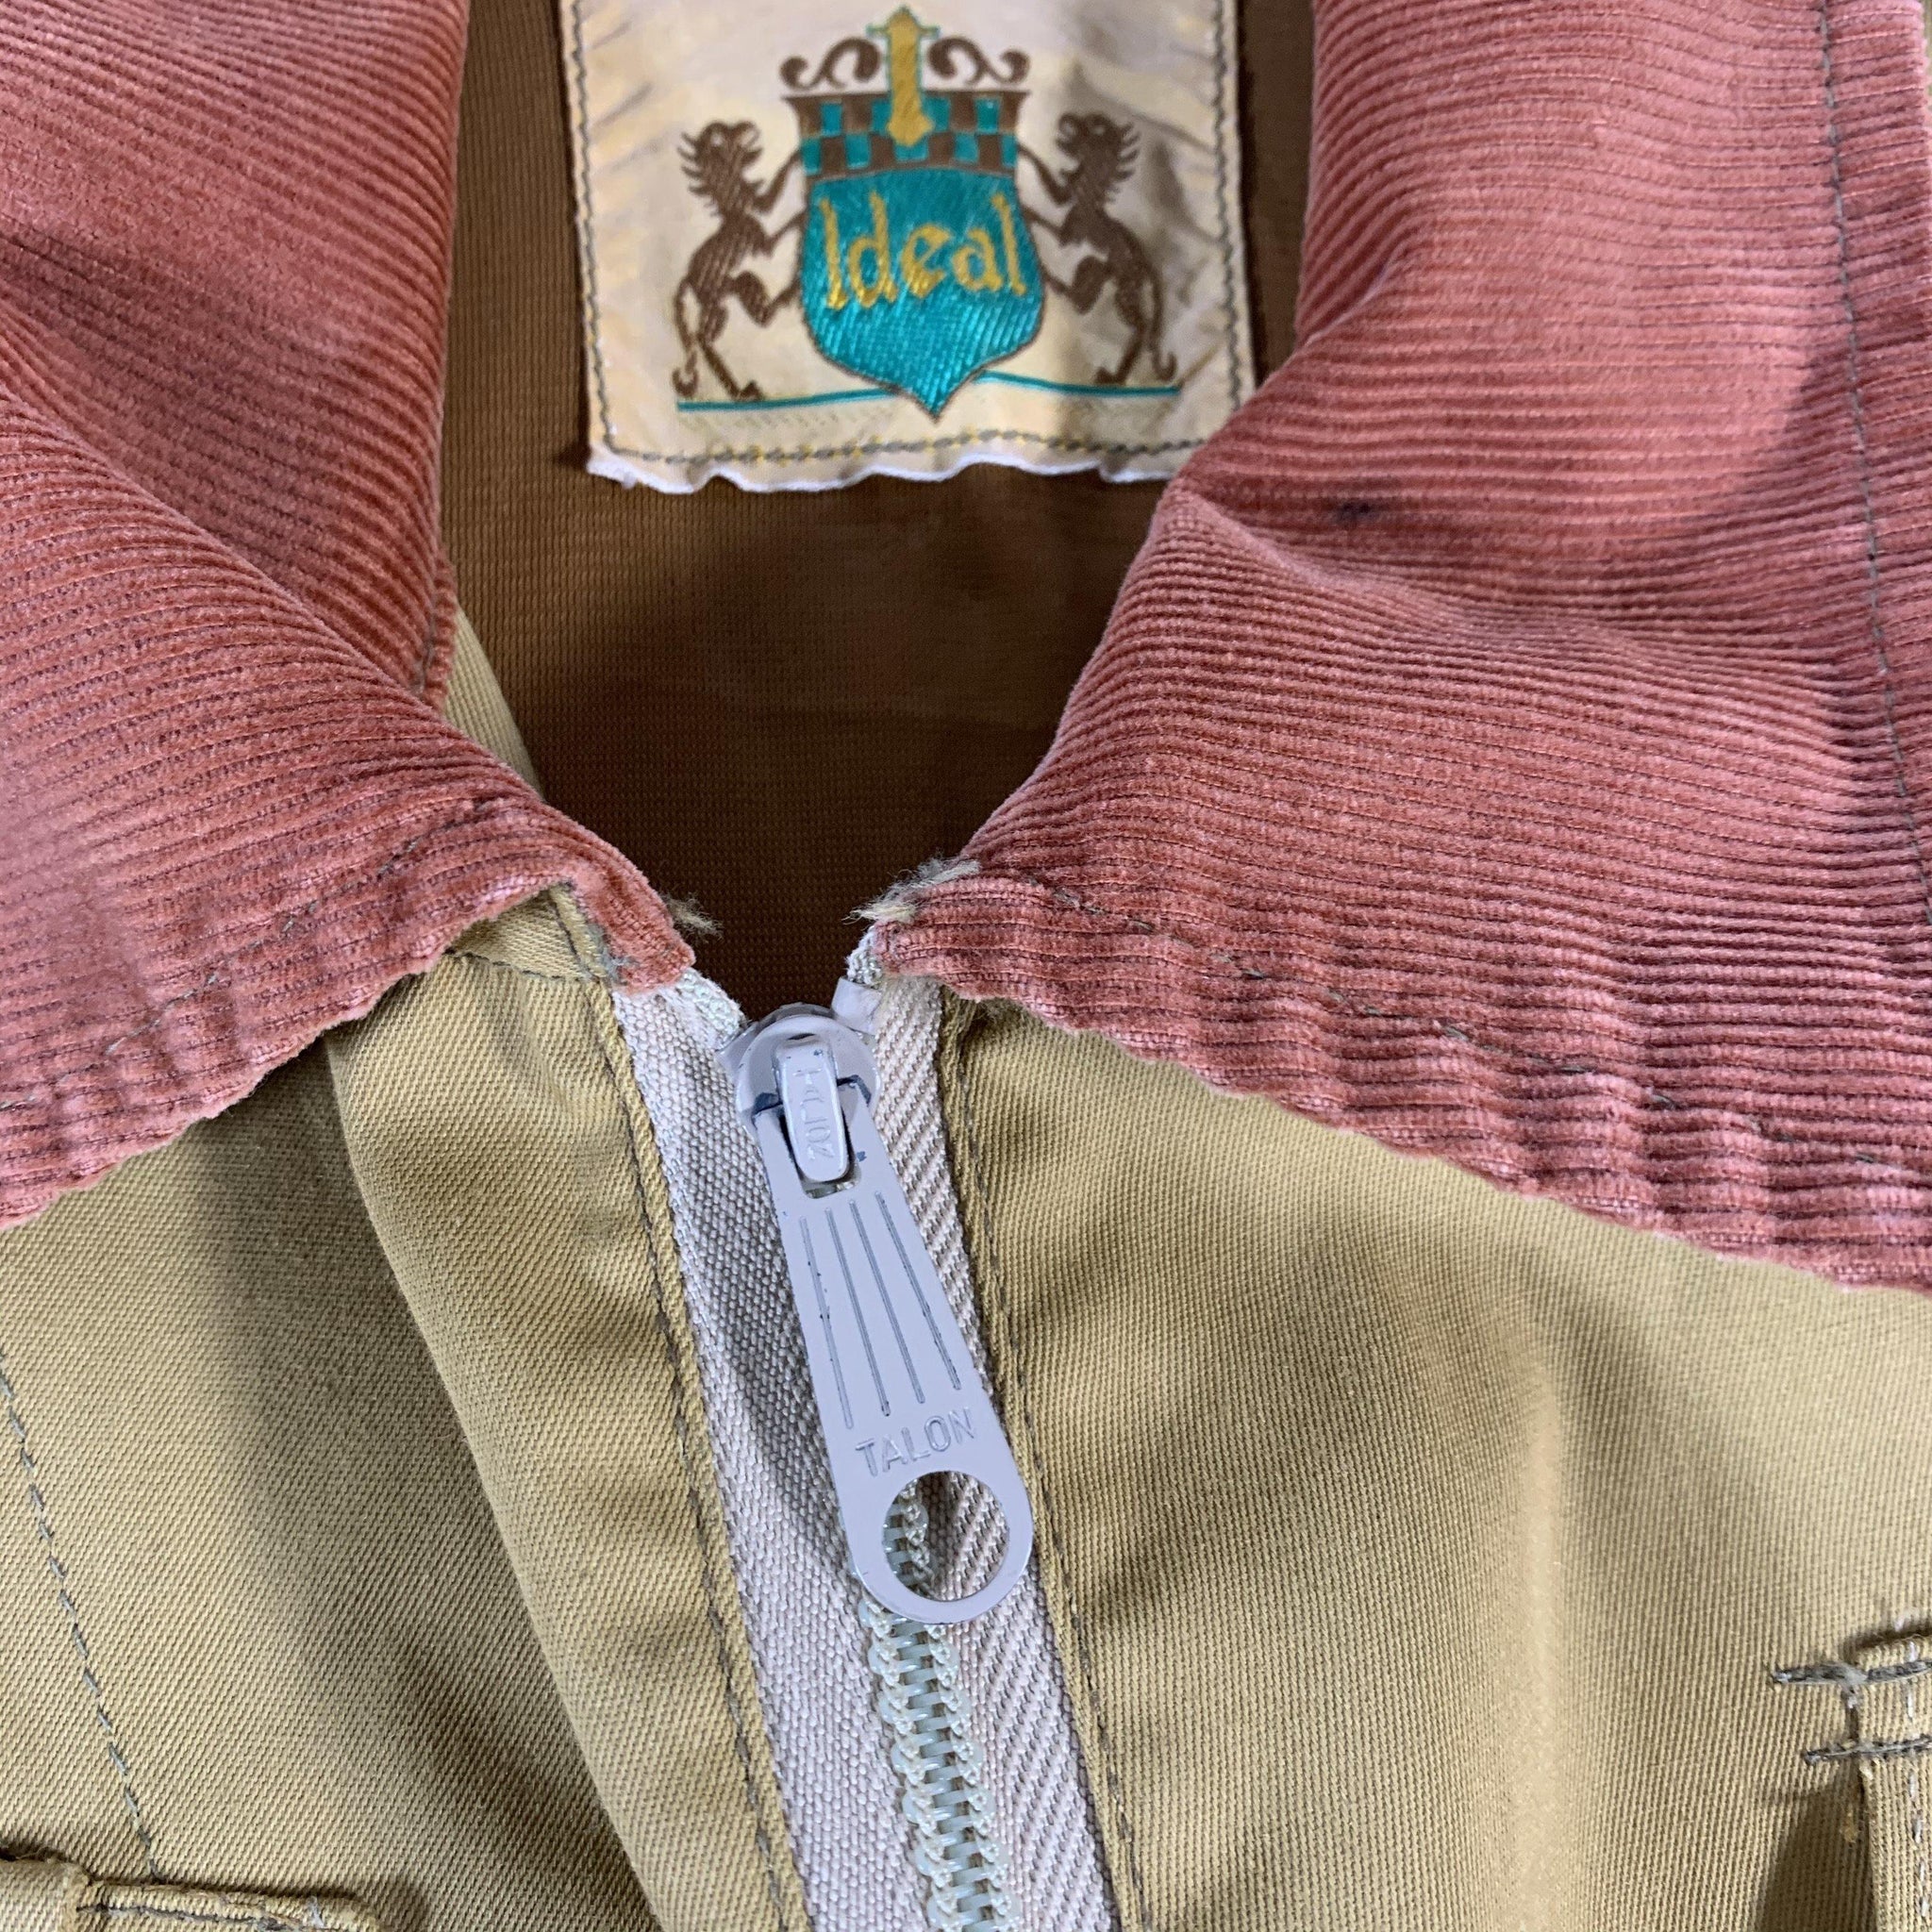 Vintage fishing jacket 🎣 : r/StreetwearFits